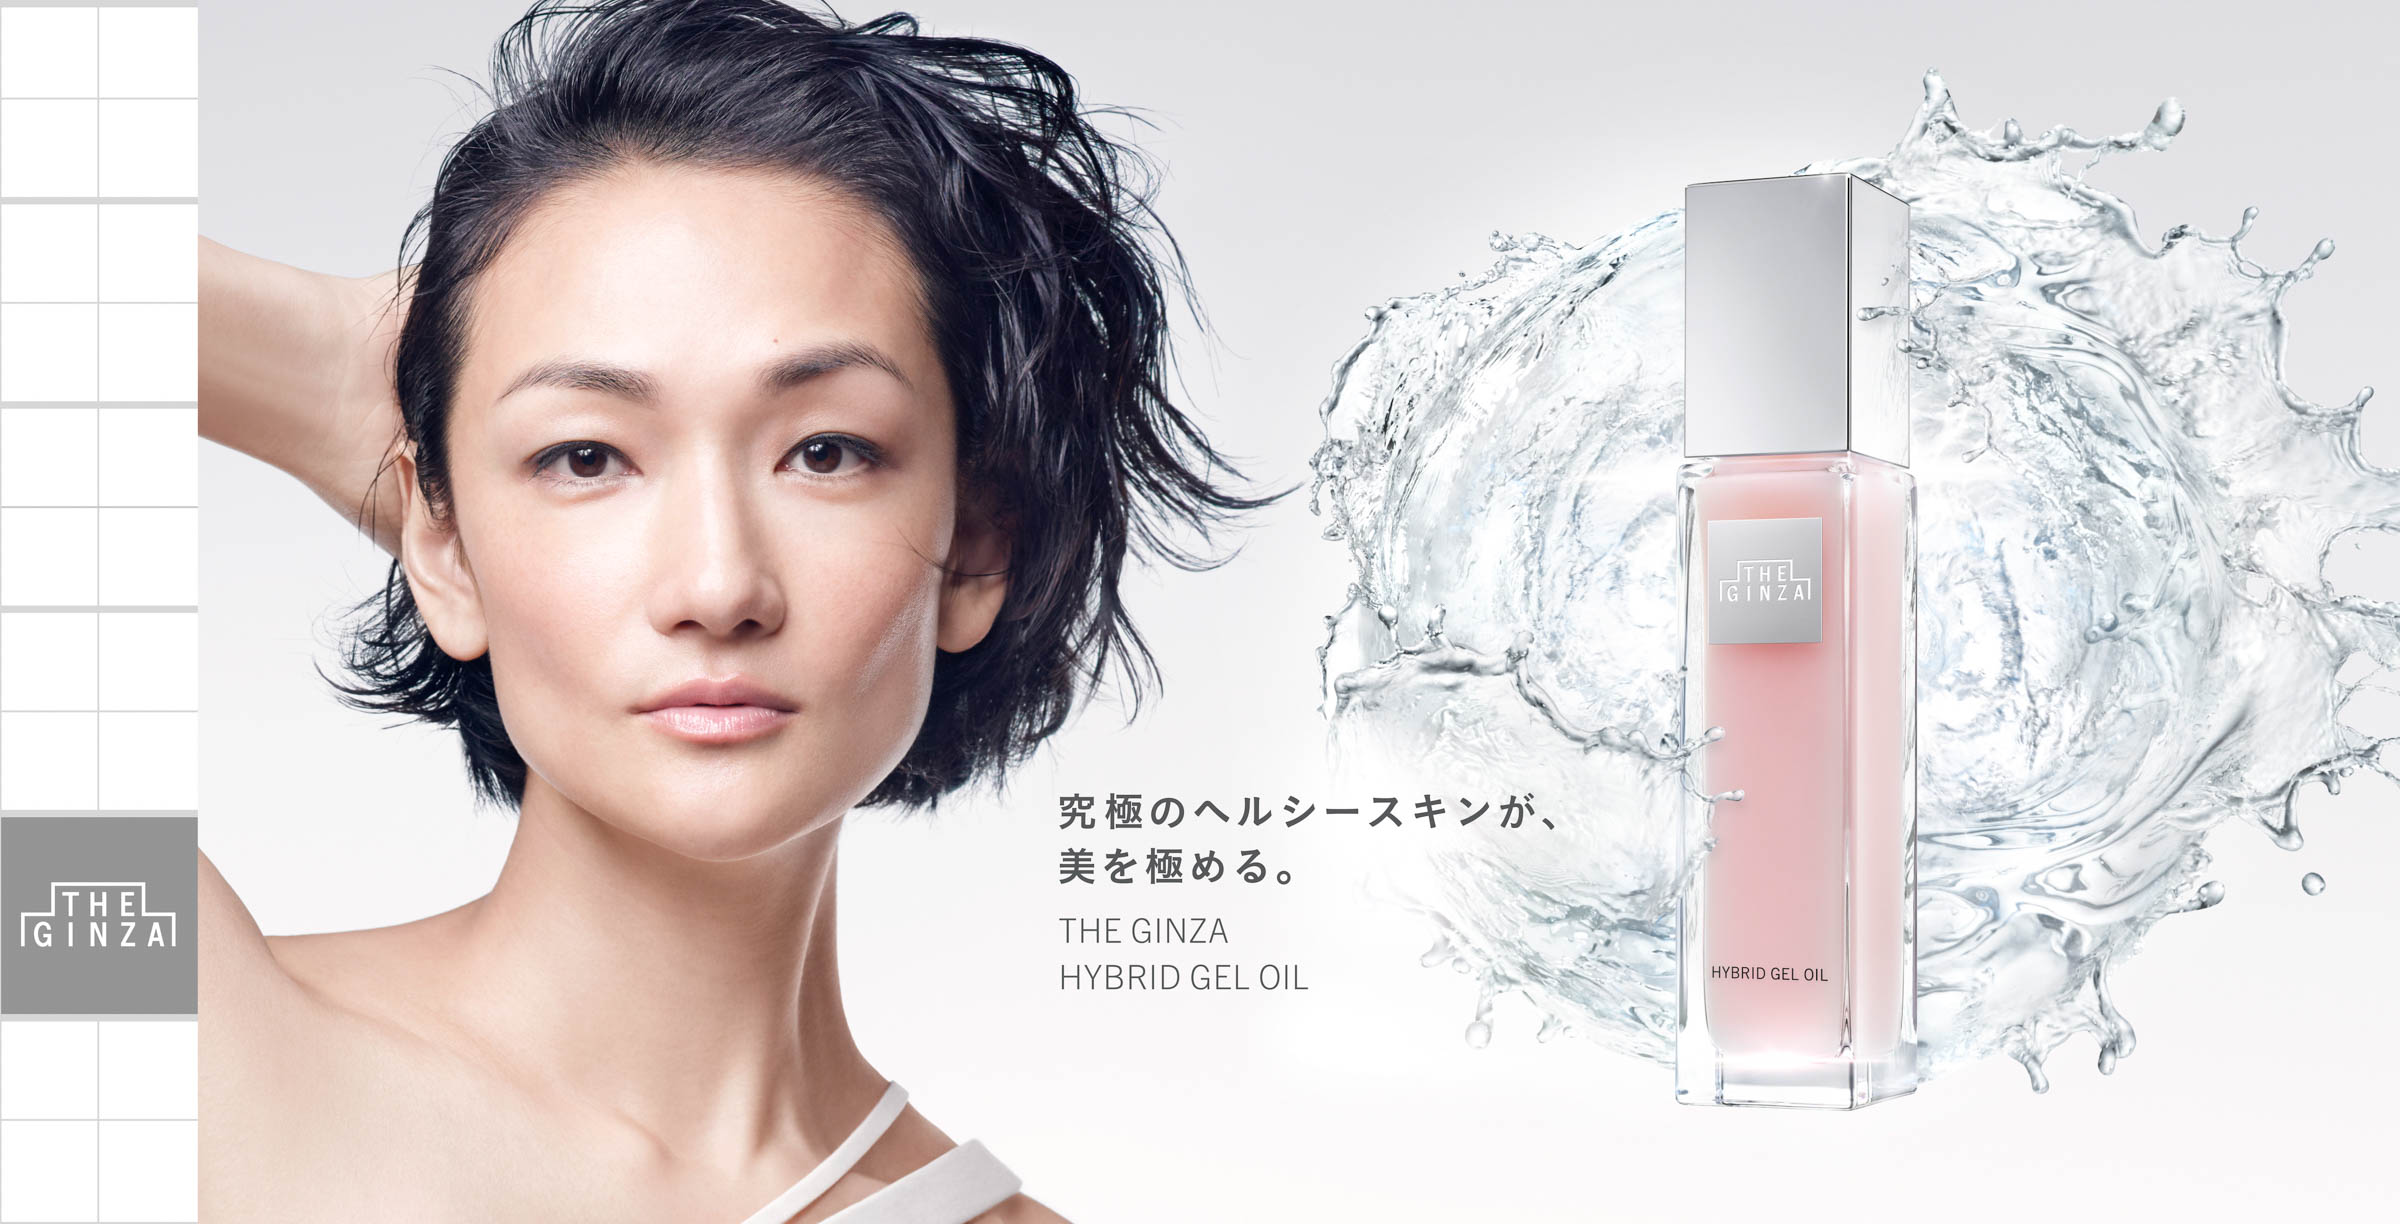 THE GINZA 新品未使用 ザ・ギンザ The Ginza 化粧水 乳液 美容液 コットン トライアルセット